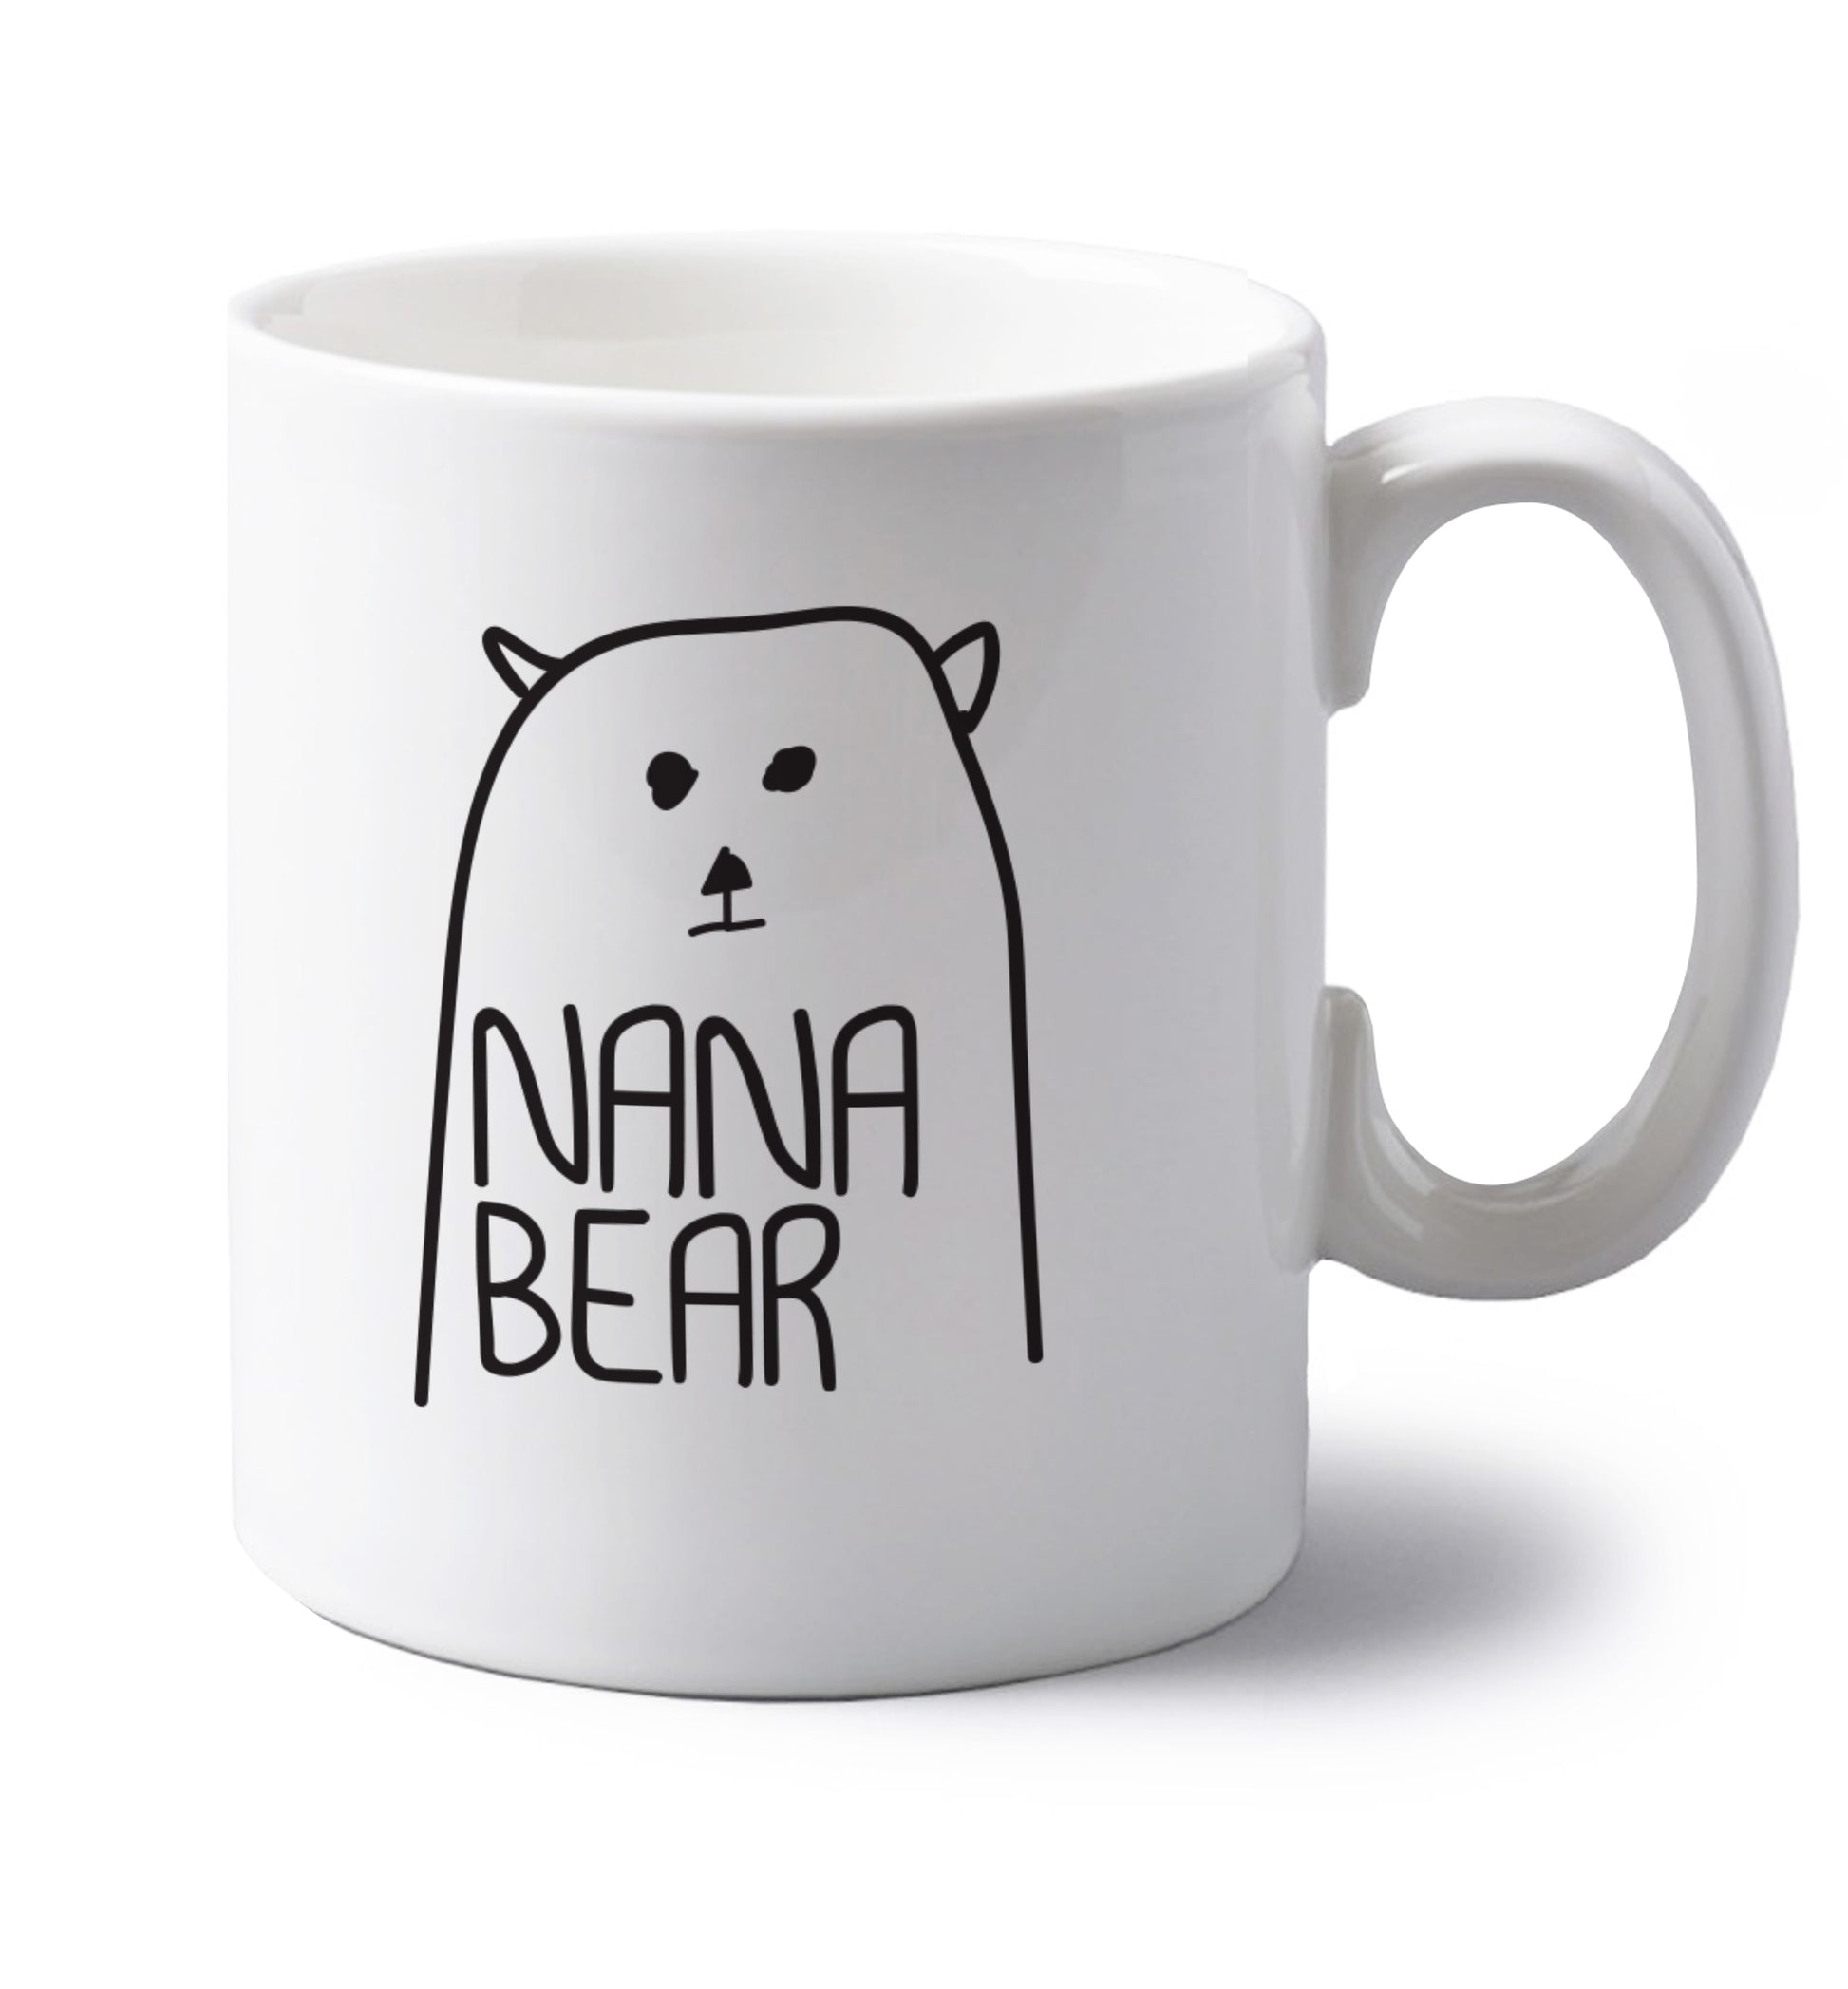 Nana bear left handed white ceramic mug 